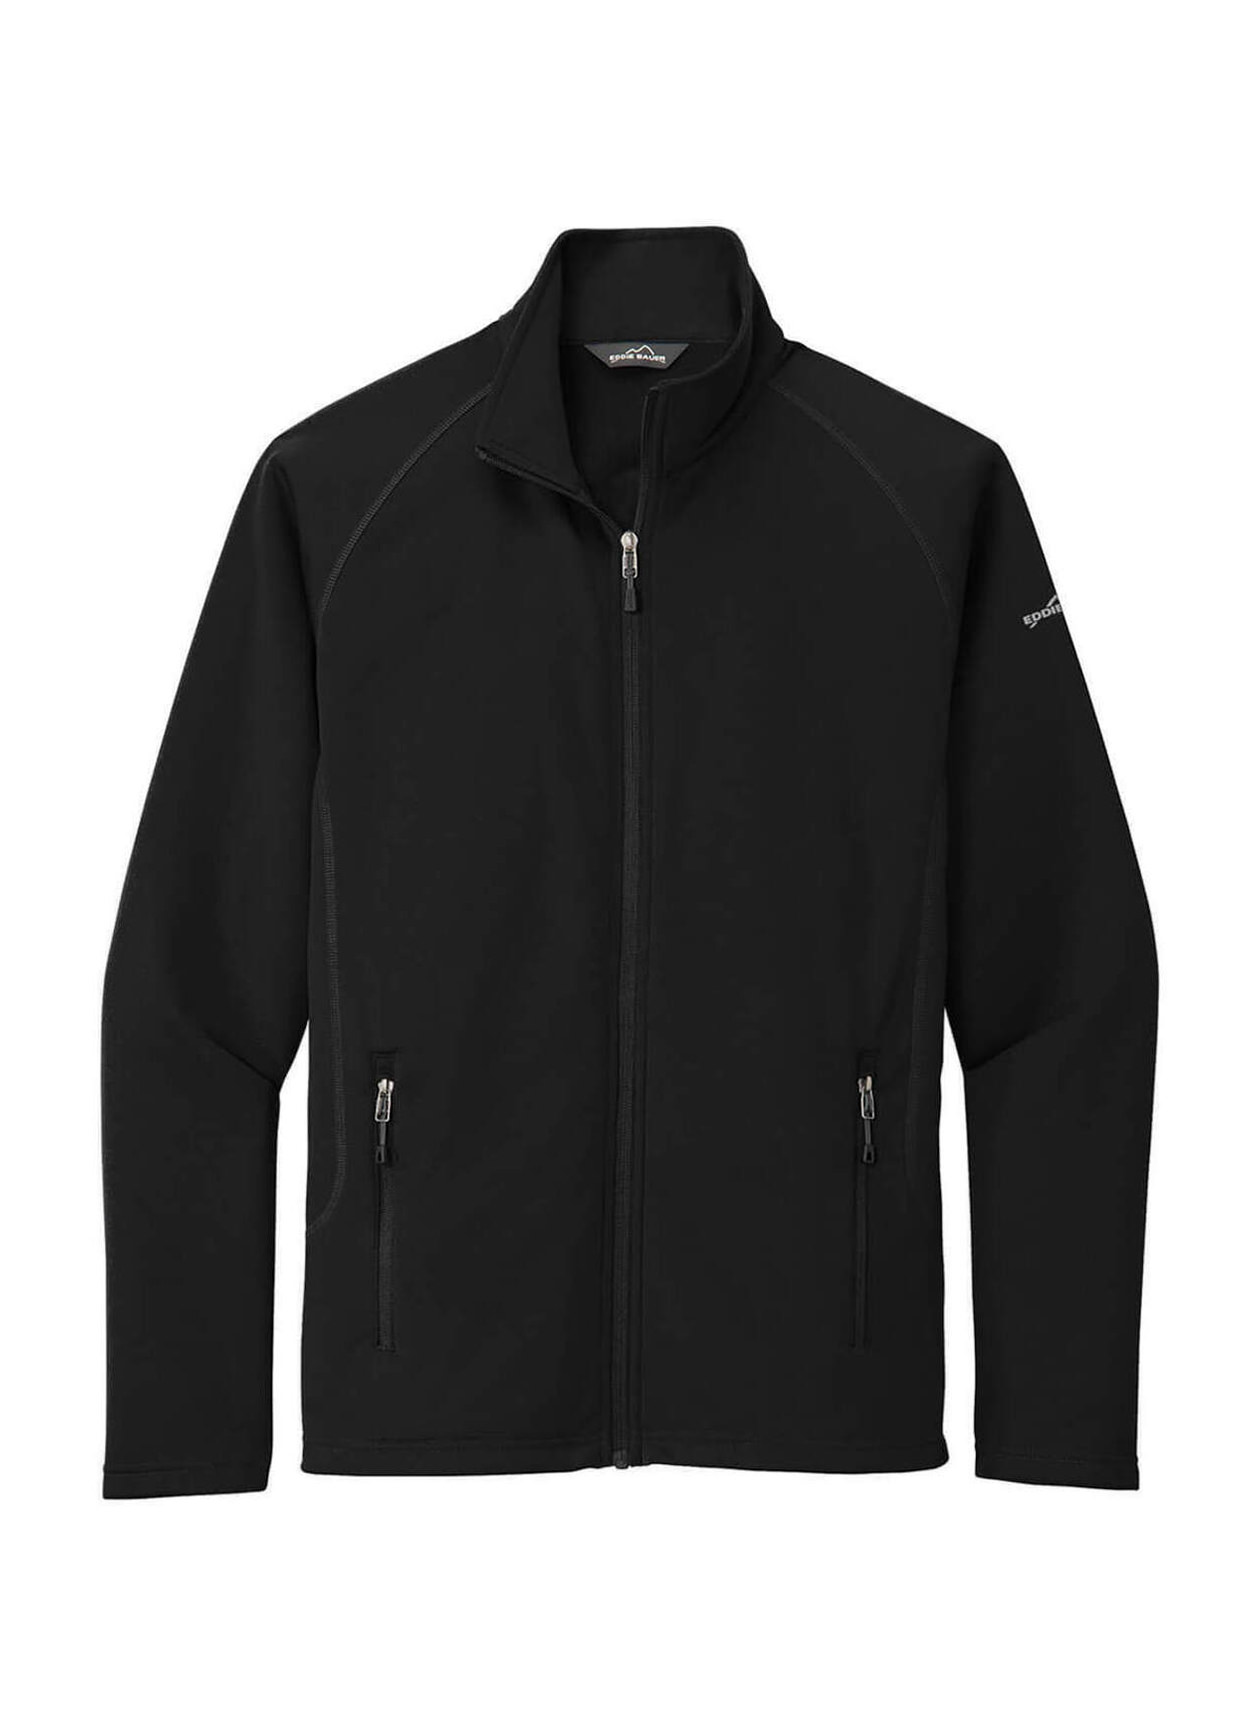 Corporate Eddie Bauer Men's Black Smooth Fleece Jacket | Custom Jackets